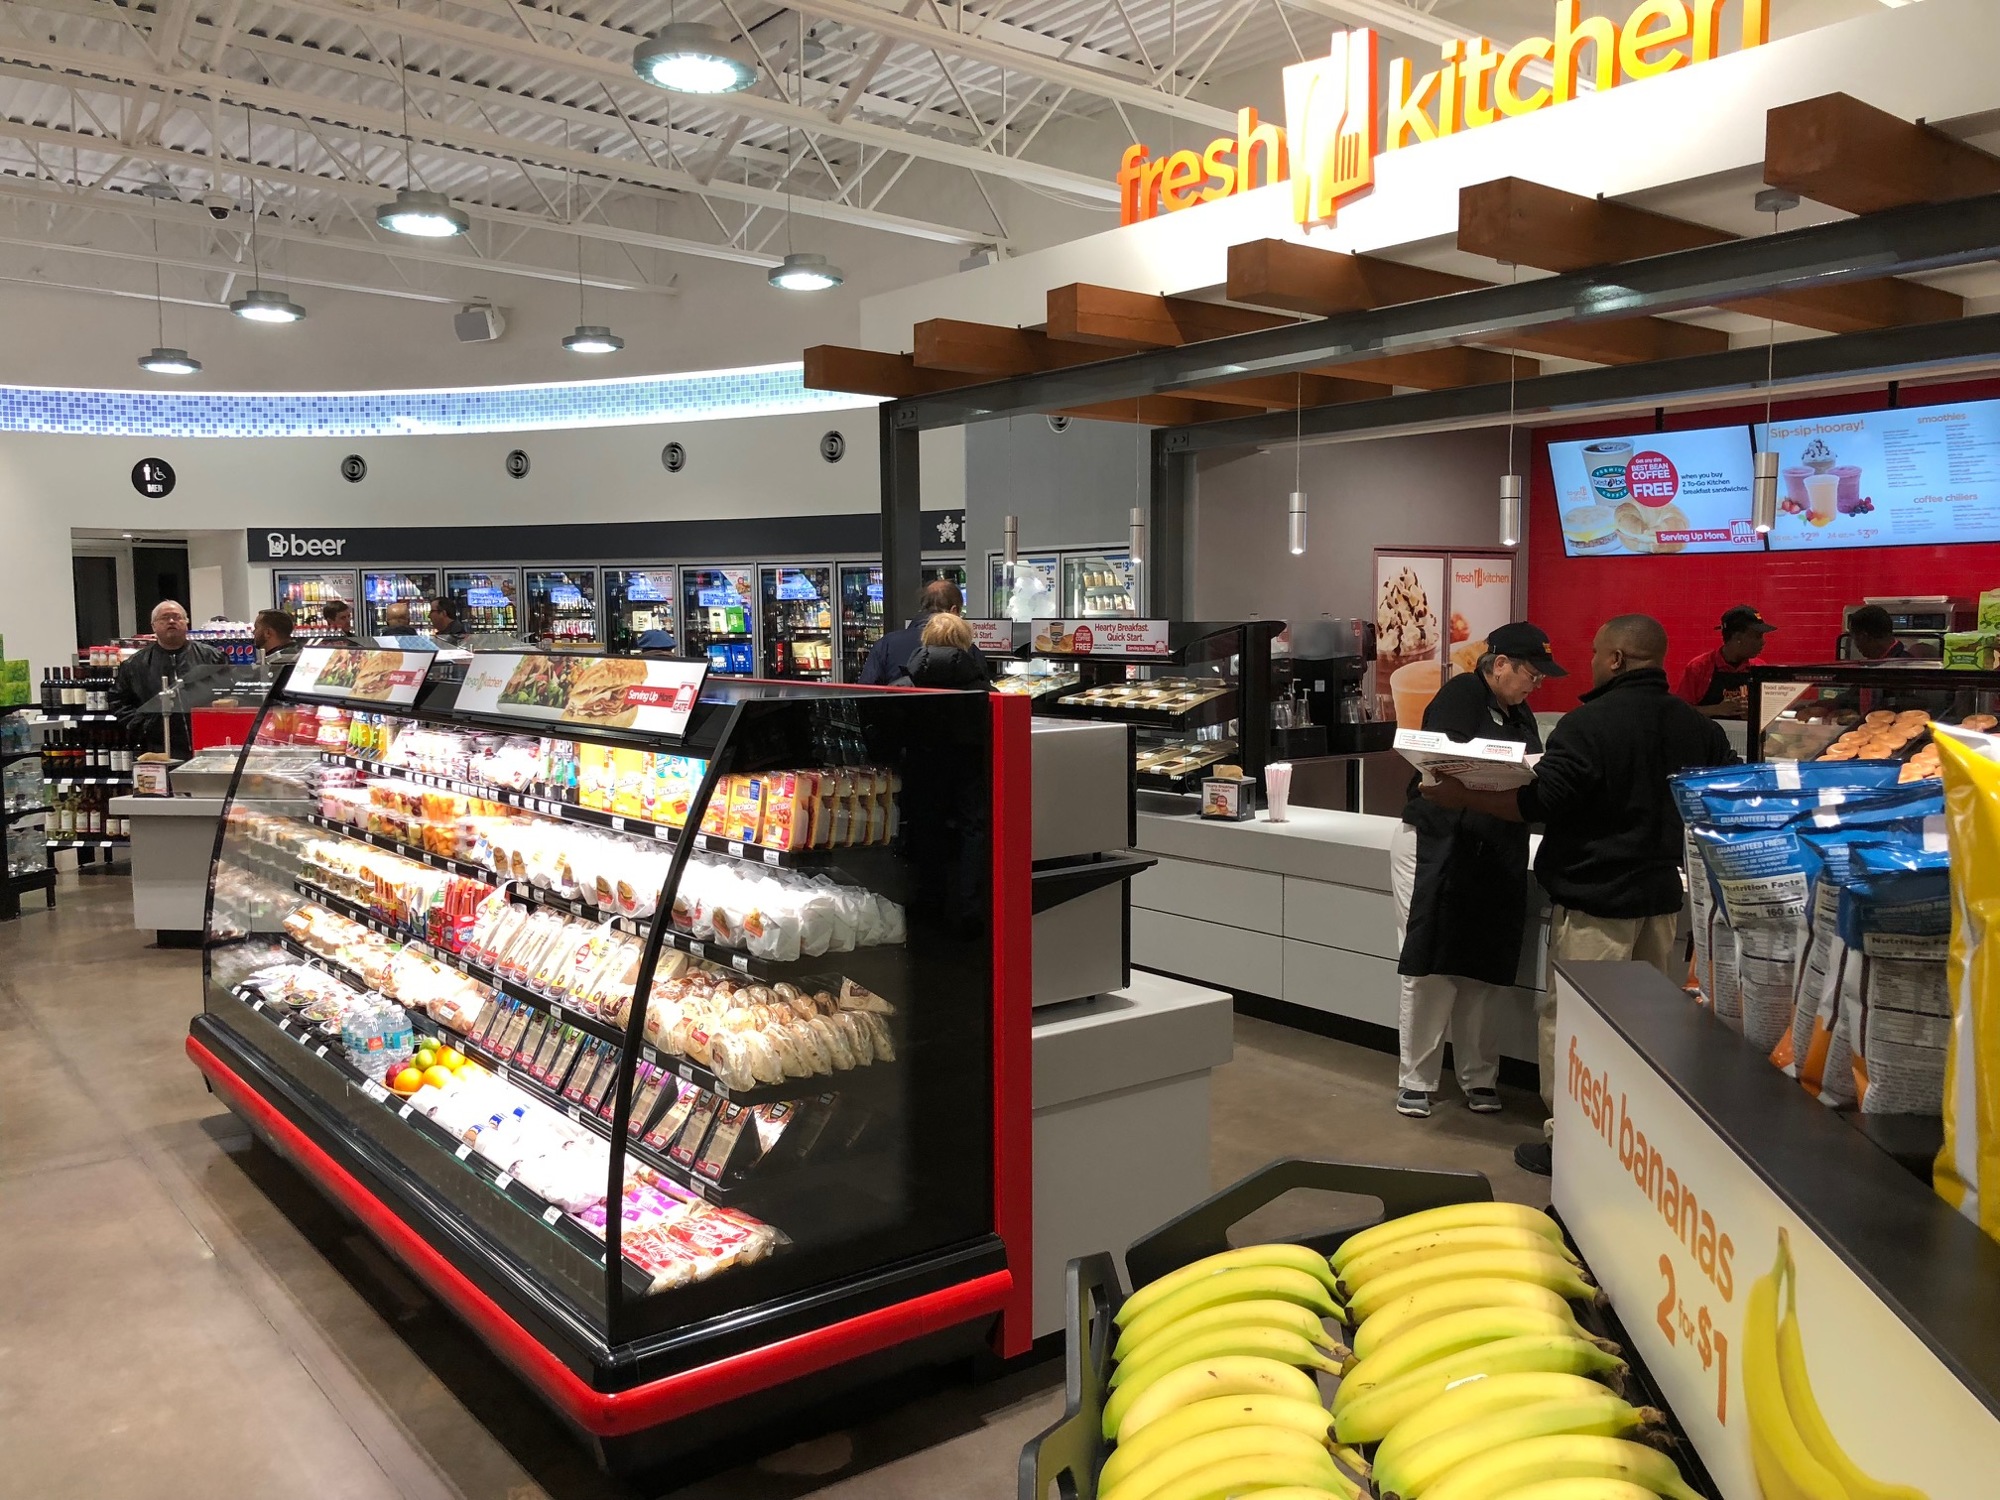 The store features Gate’s Fresh Kitchen fast-casual café, Yobe frozen yogurt and Best Bean Coffee.  (Photo by Karen Bune Mathis)